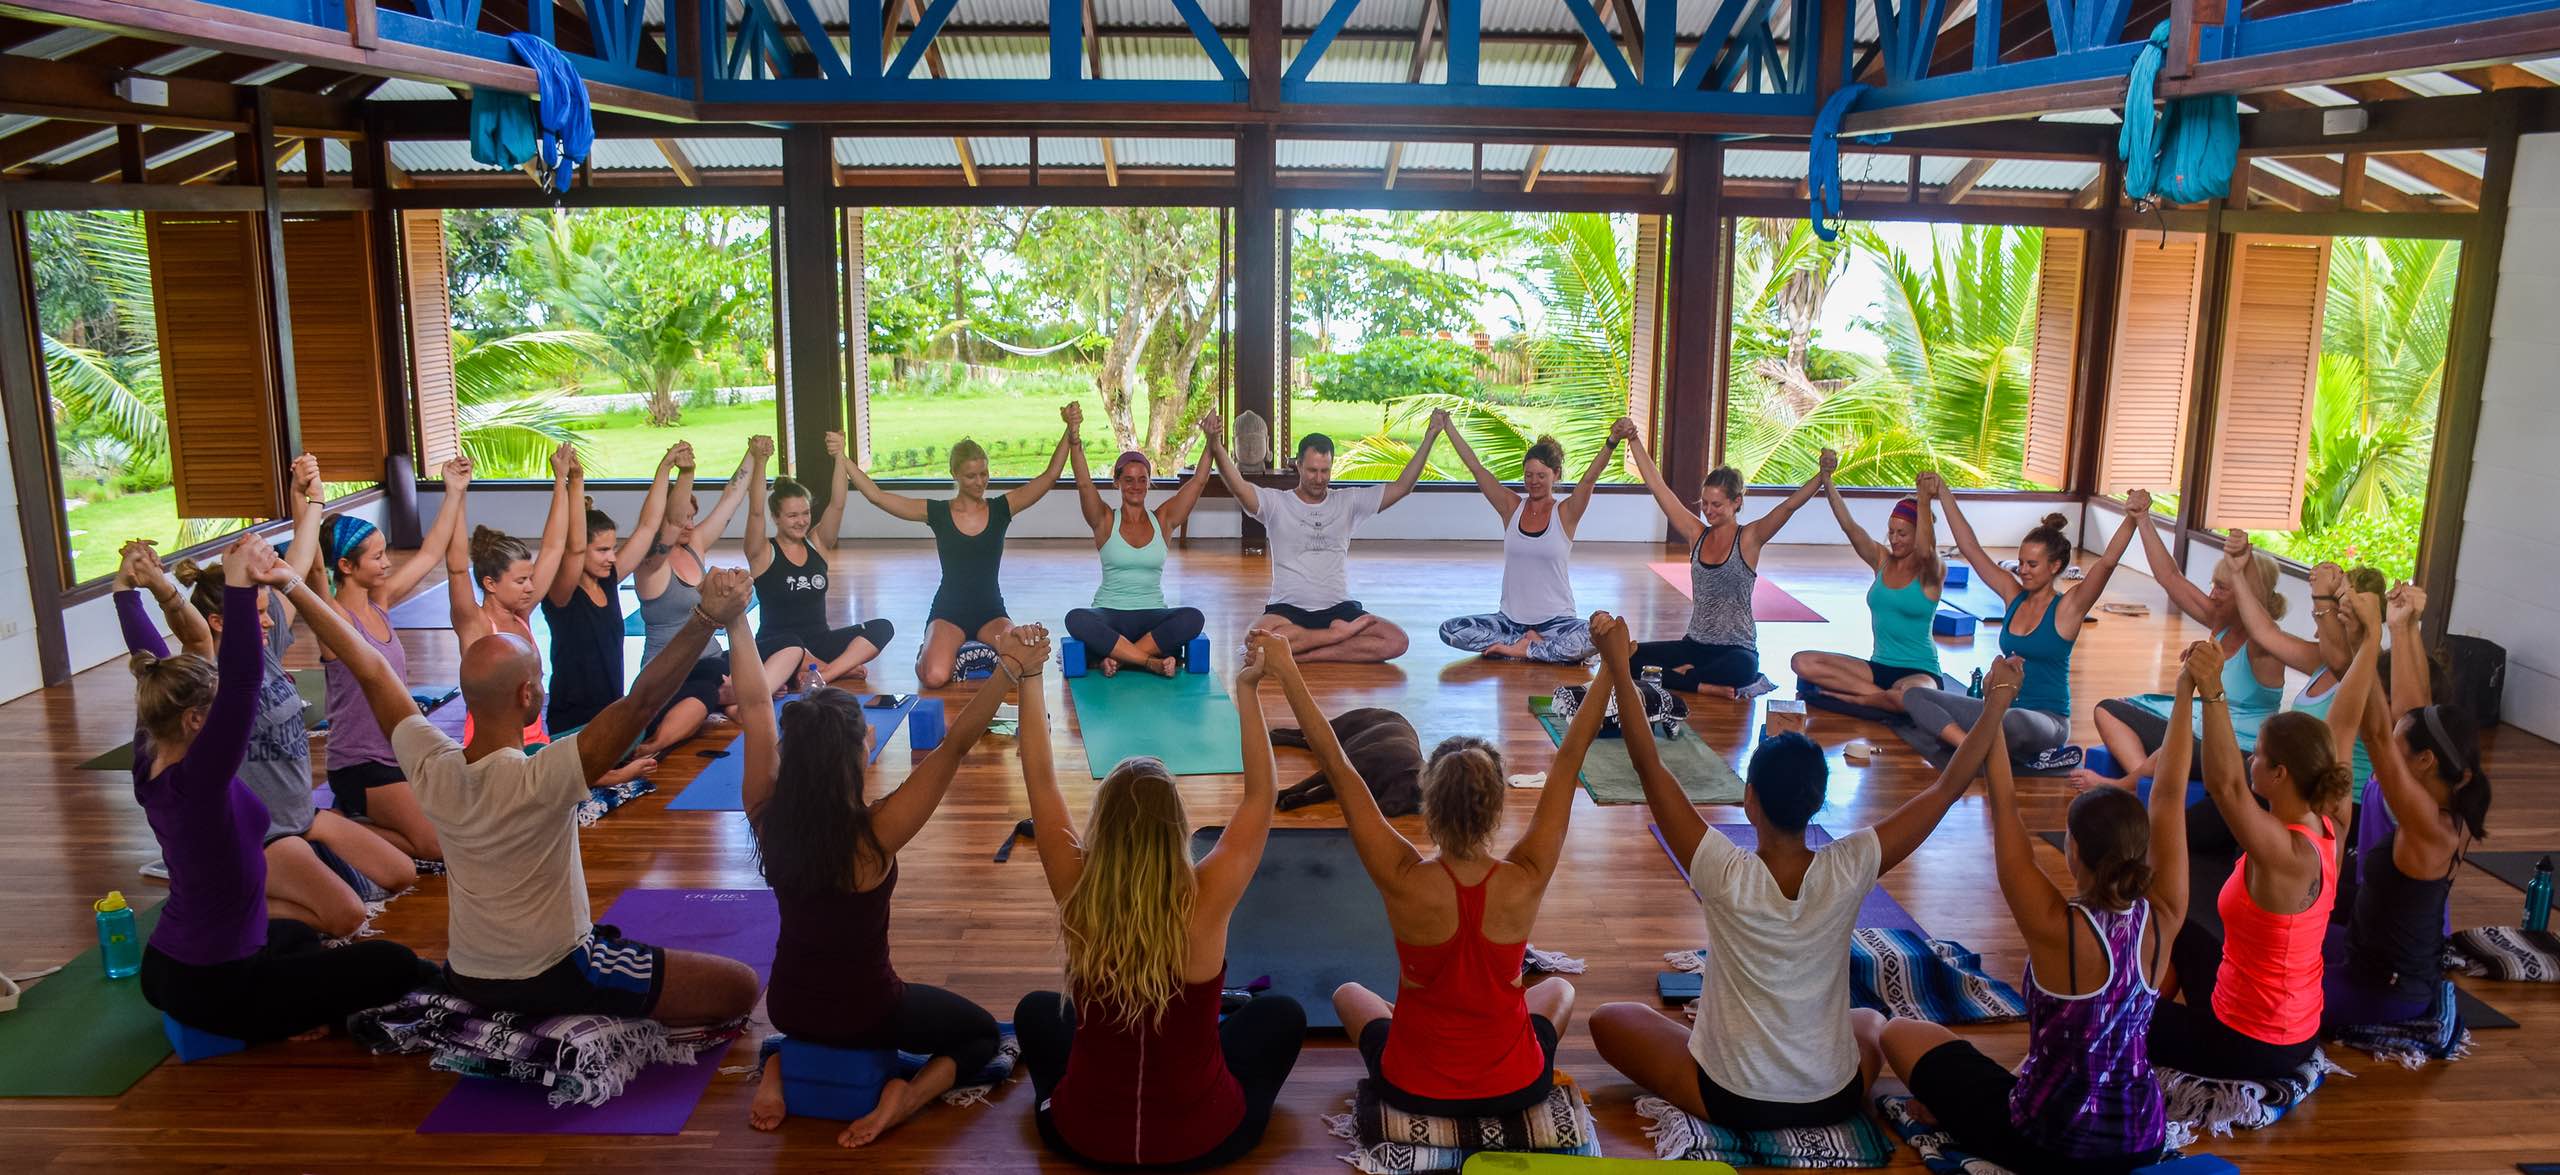 200 Hour Yoga Teacher Training in 2 Weeks